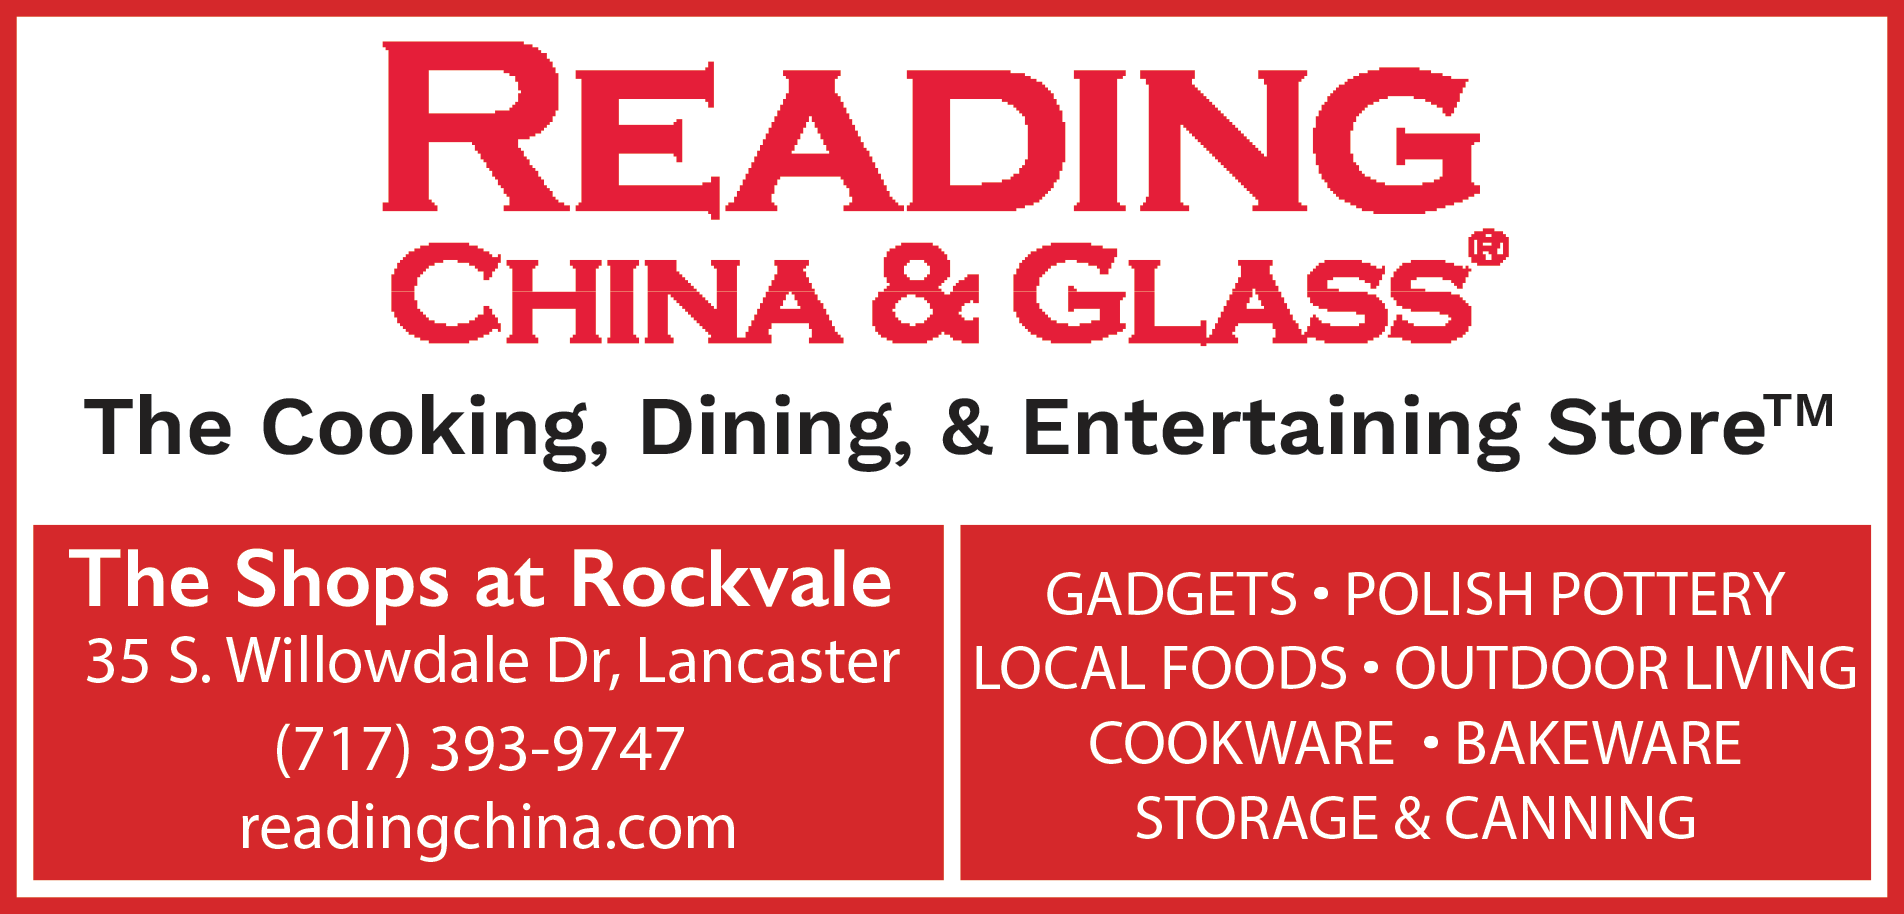 Reading China & Glass Print Ad